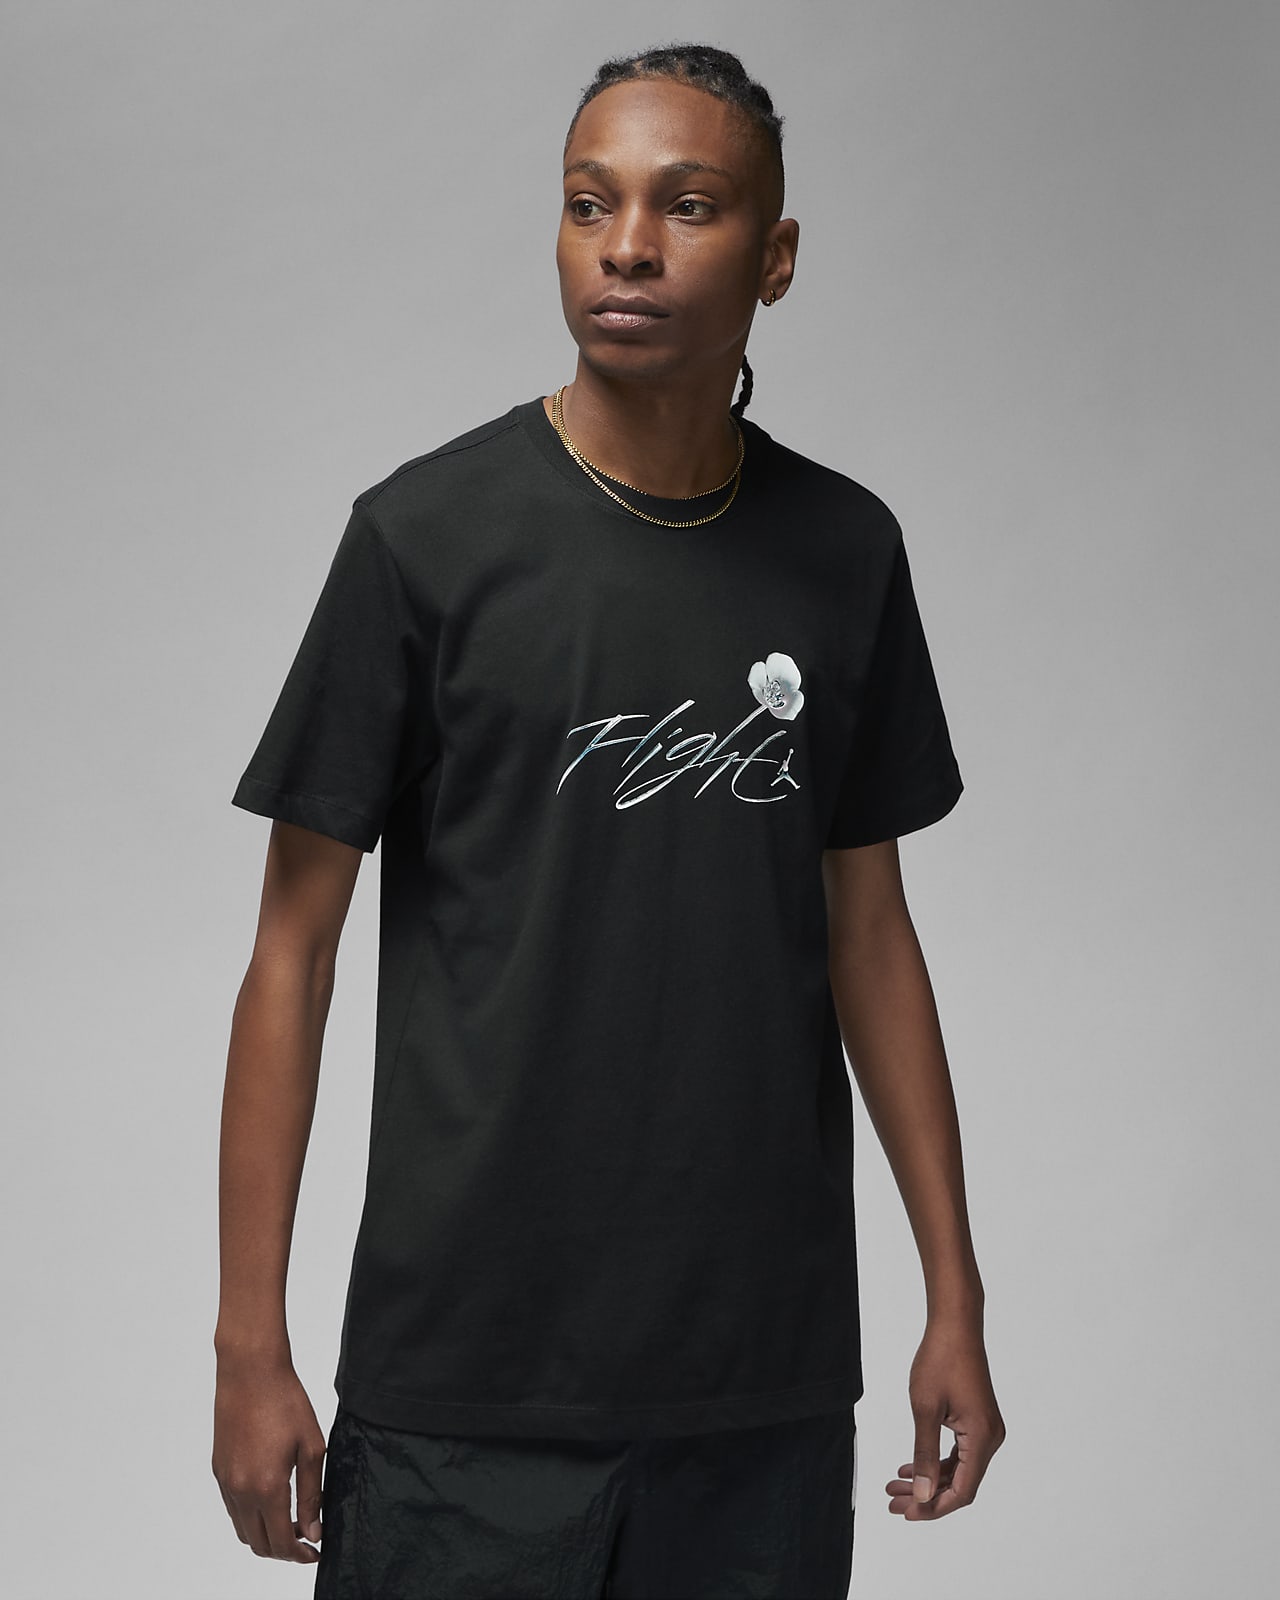 China Memorizar Pico Jordan Camiseta - Hombre. Nike ES